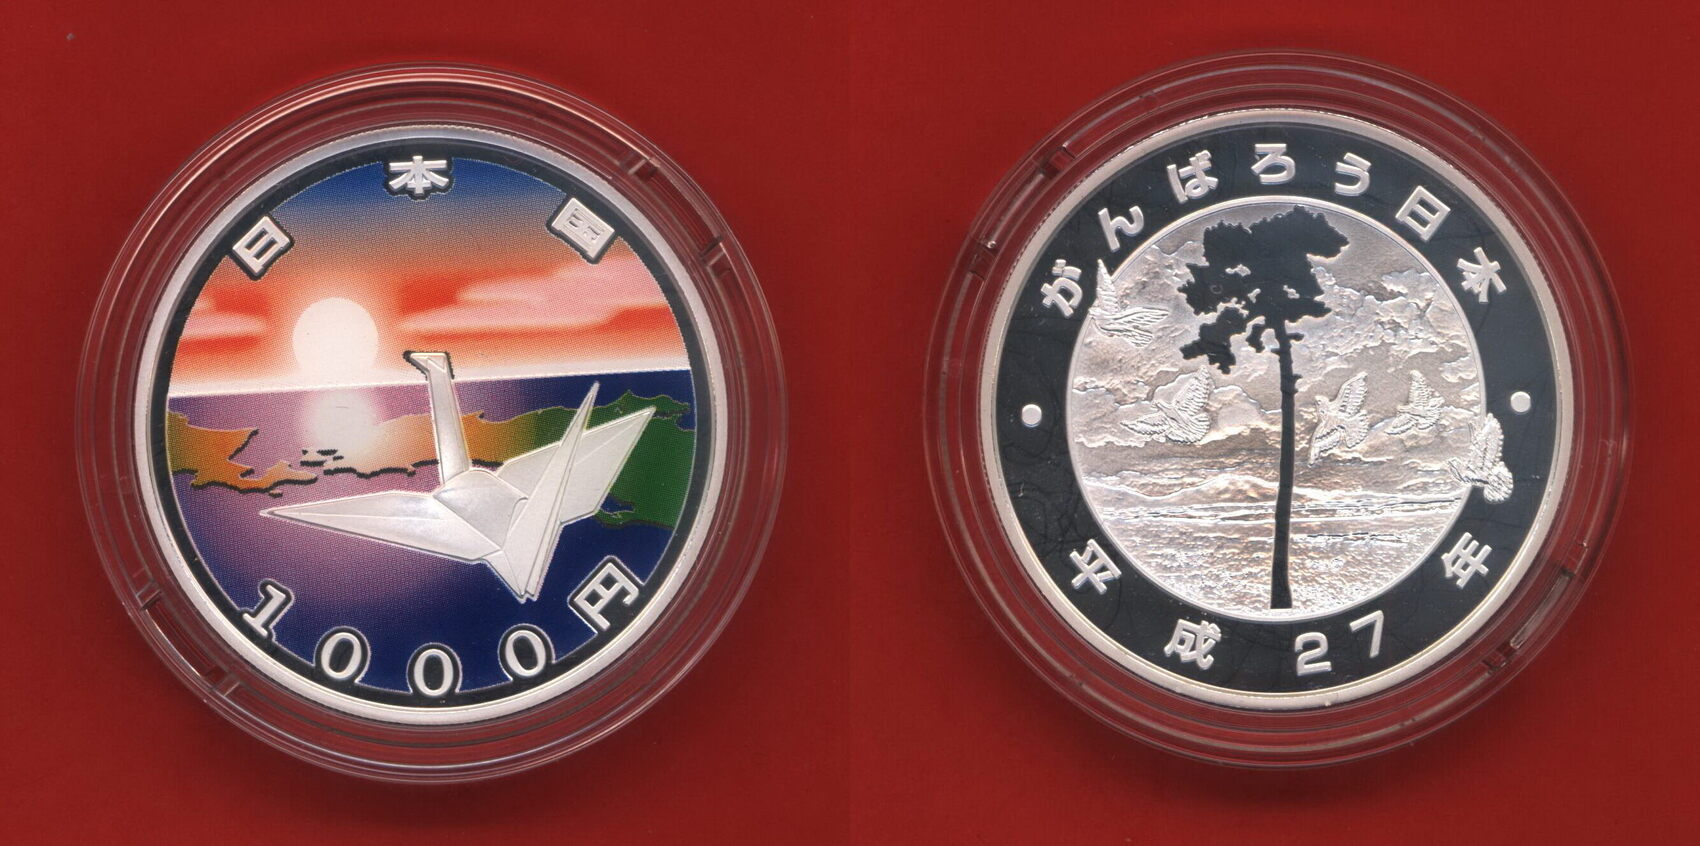 ORIGAMI CRANE EARTHQUAKE RECONSTRUCTION Silver Proof Coin 1000 Yen Japan 2015 